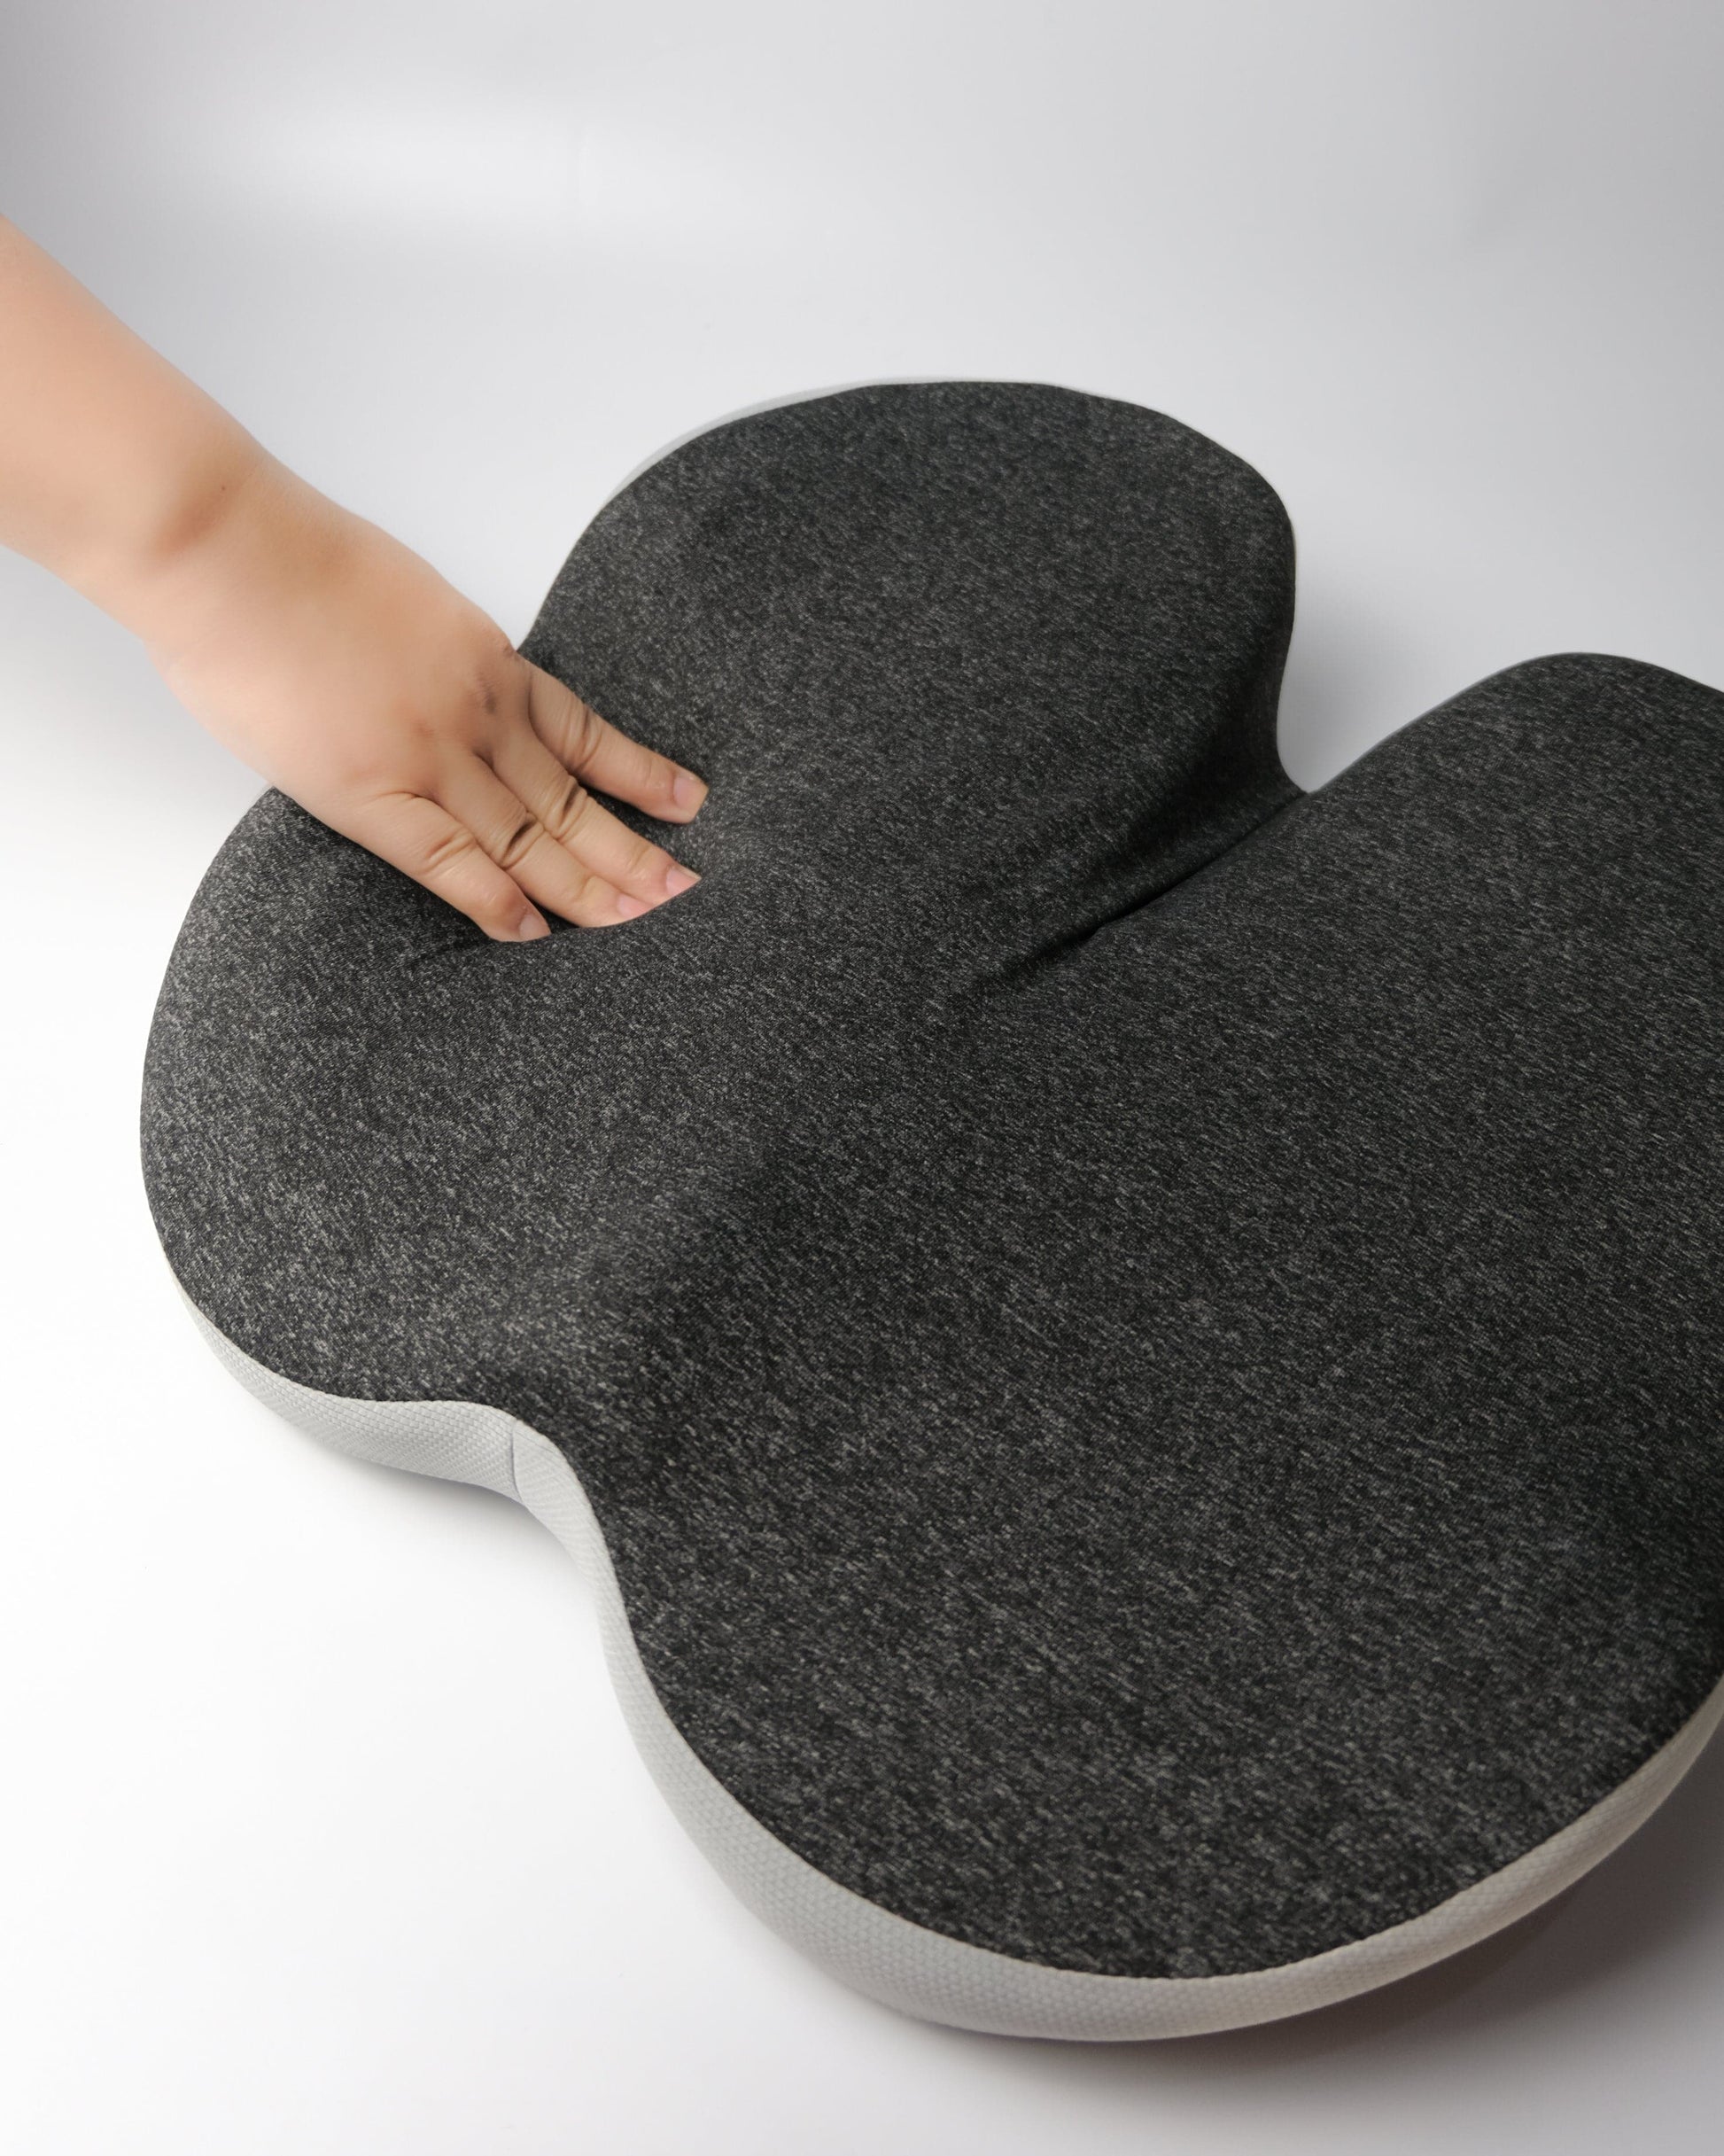 Daily Cushion Orthopedic Seat Pillow, Pressure Relief Seat Cushion,  Orthopedic Memory Foam Seat Cushion, Office Chair Car Seat Cushion